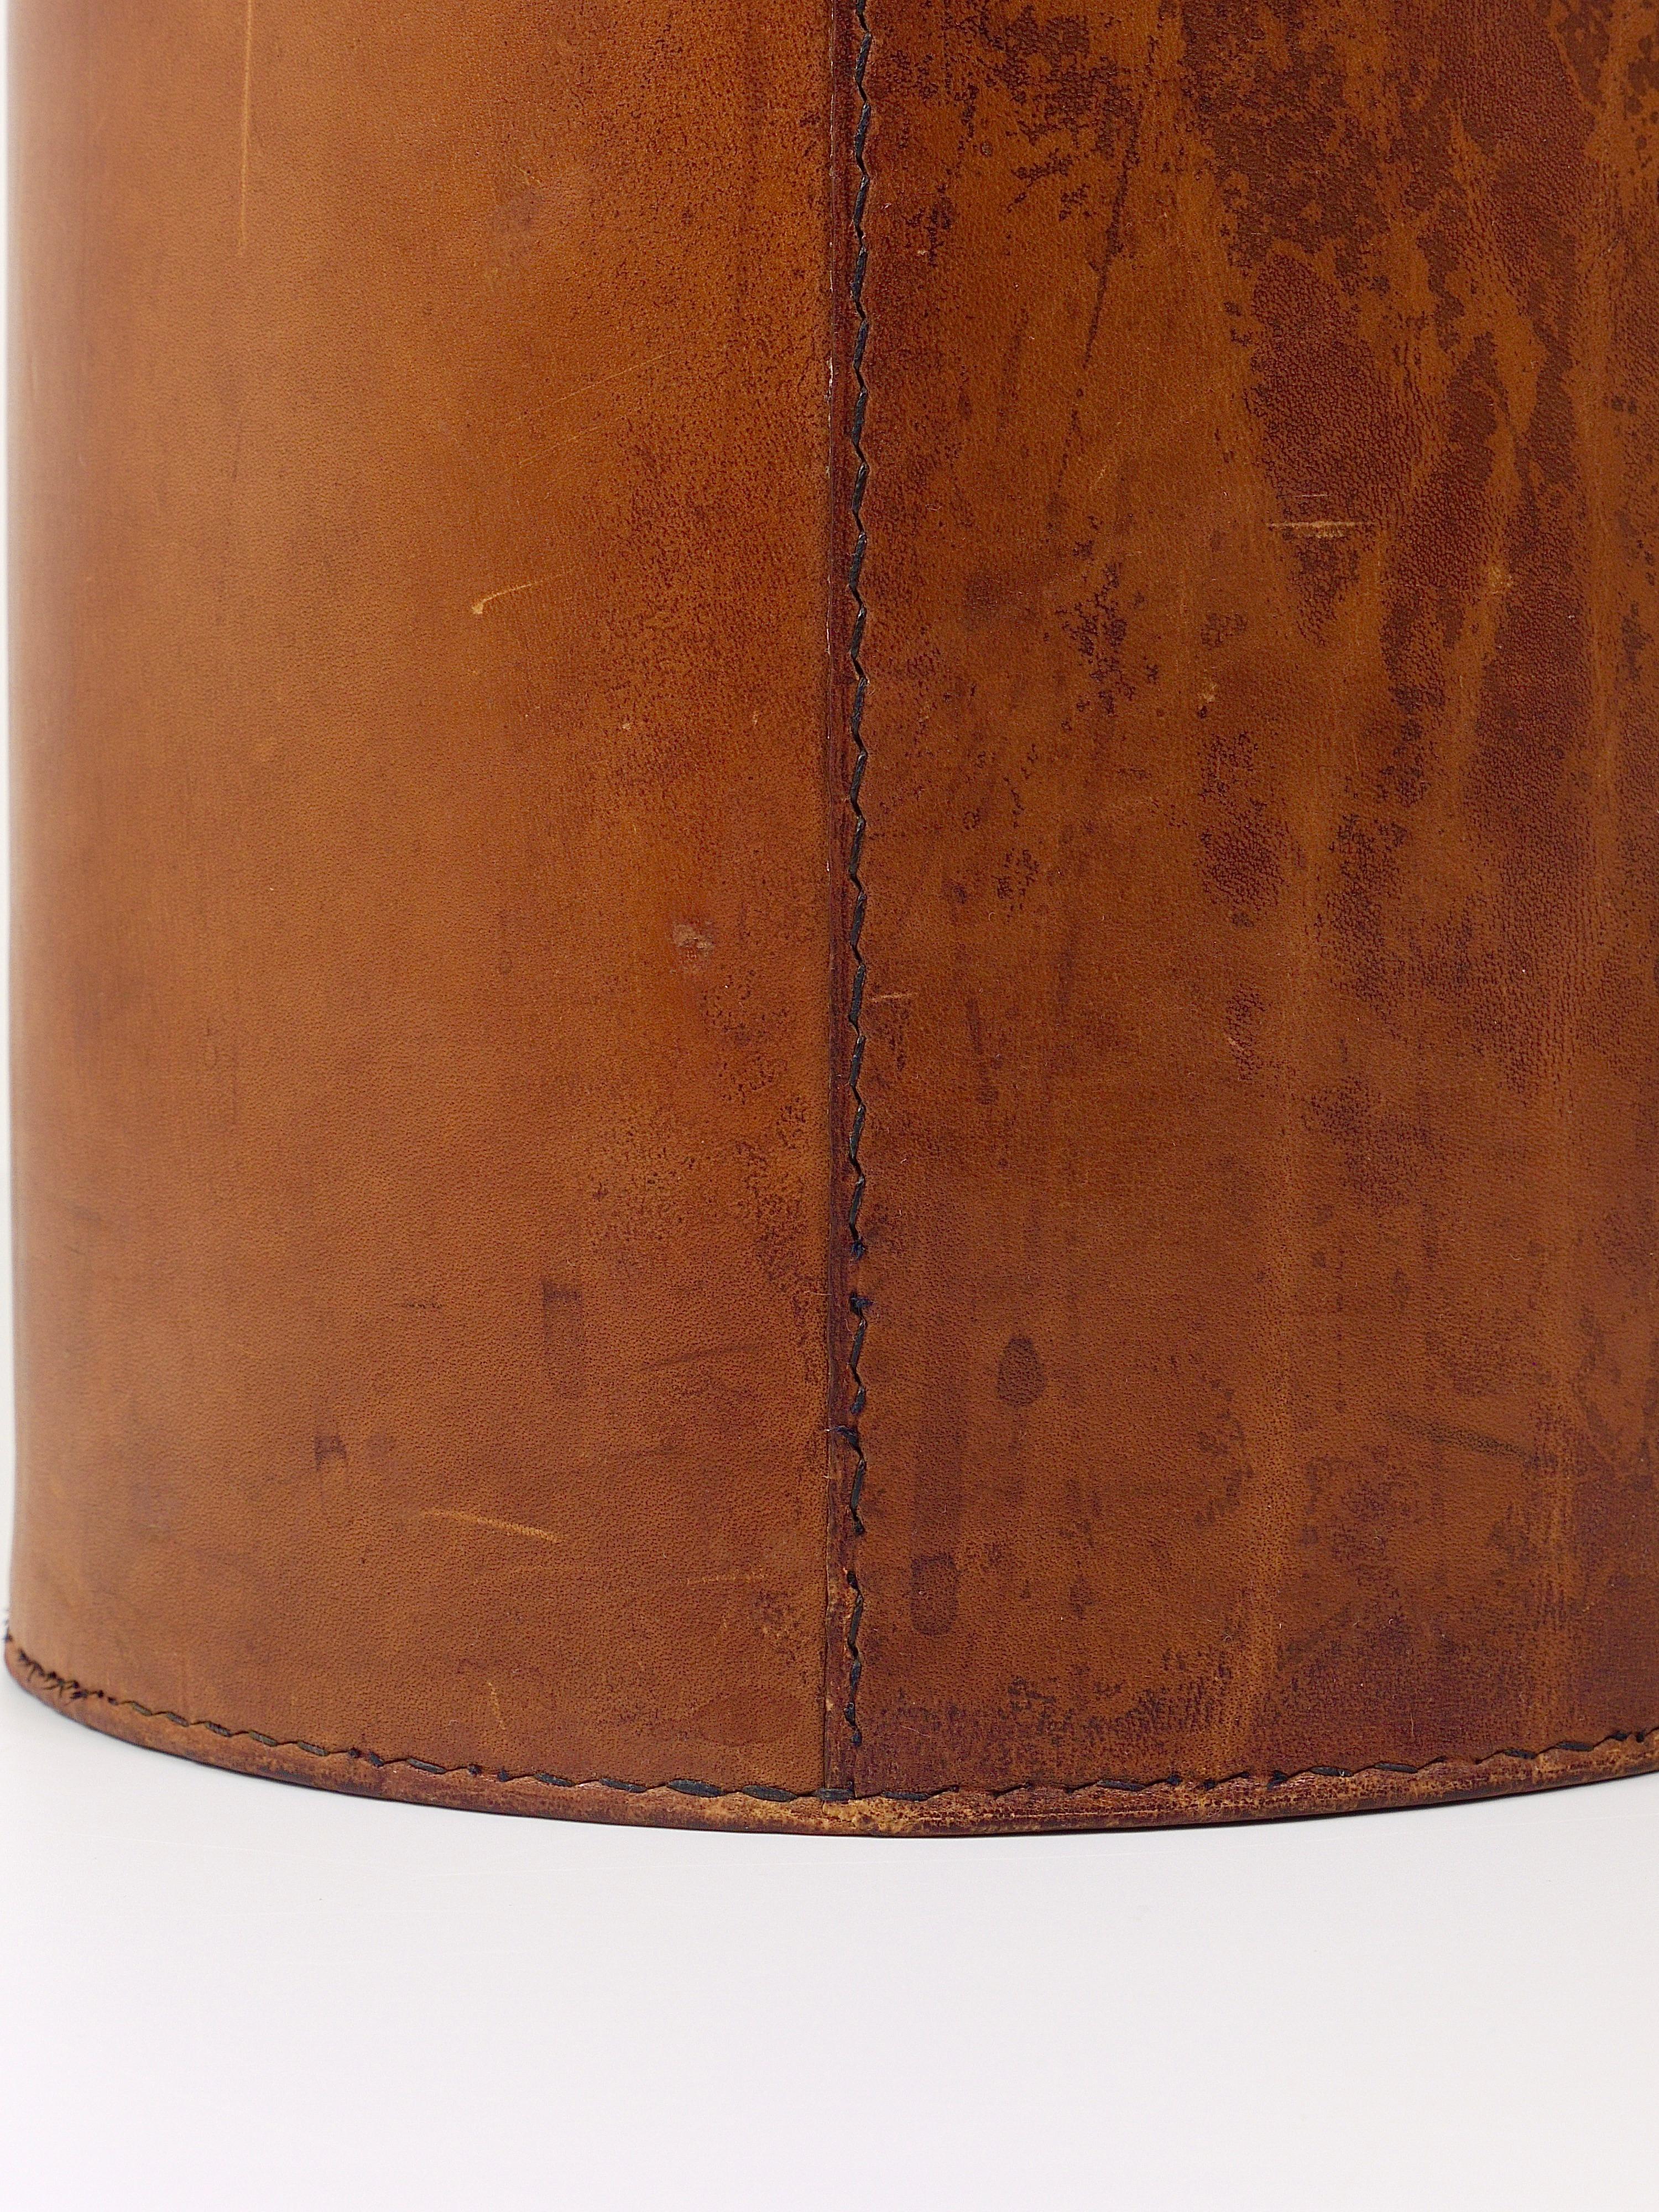 Carl Auböck Brown Tan Leather Wastepaper Basket / Paper Bin, Austria, 1950s 8